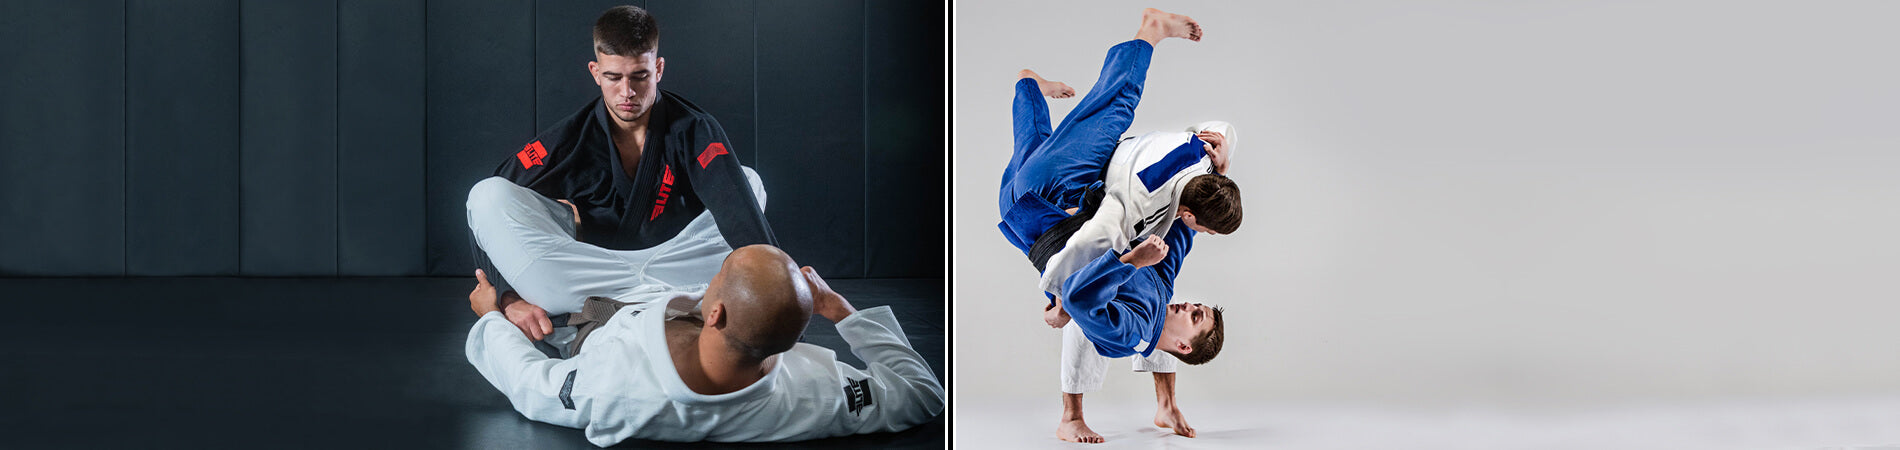 What is the Best Martial Art for Skinny People Judo or Jiu-Jitsu?